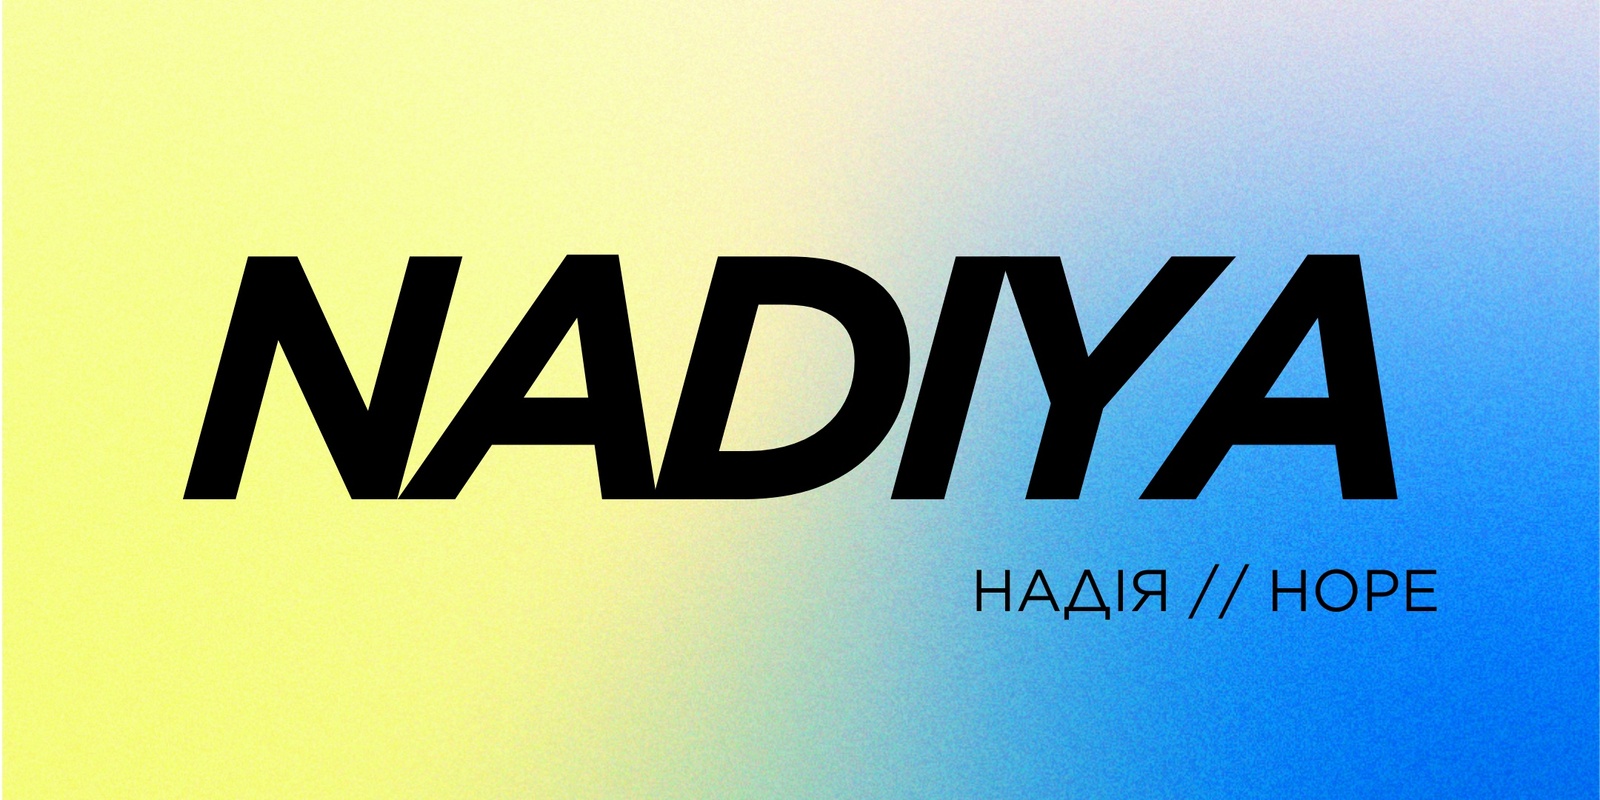 Banner image for NADIYA 